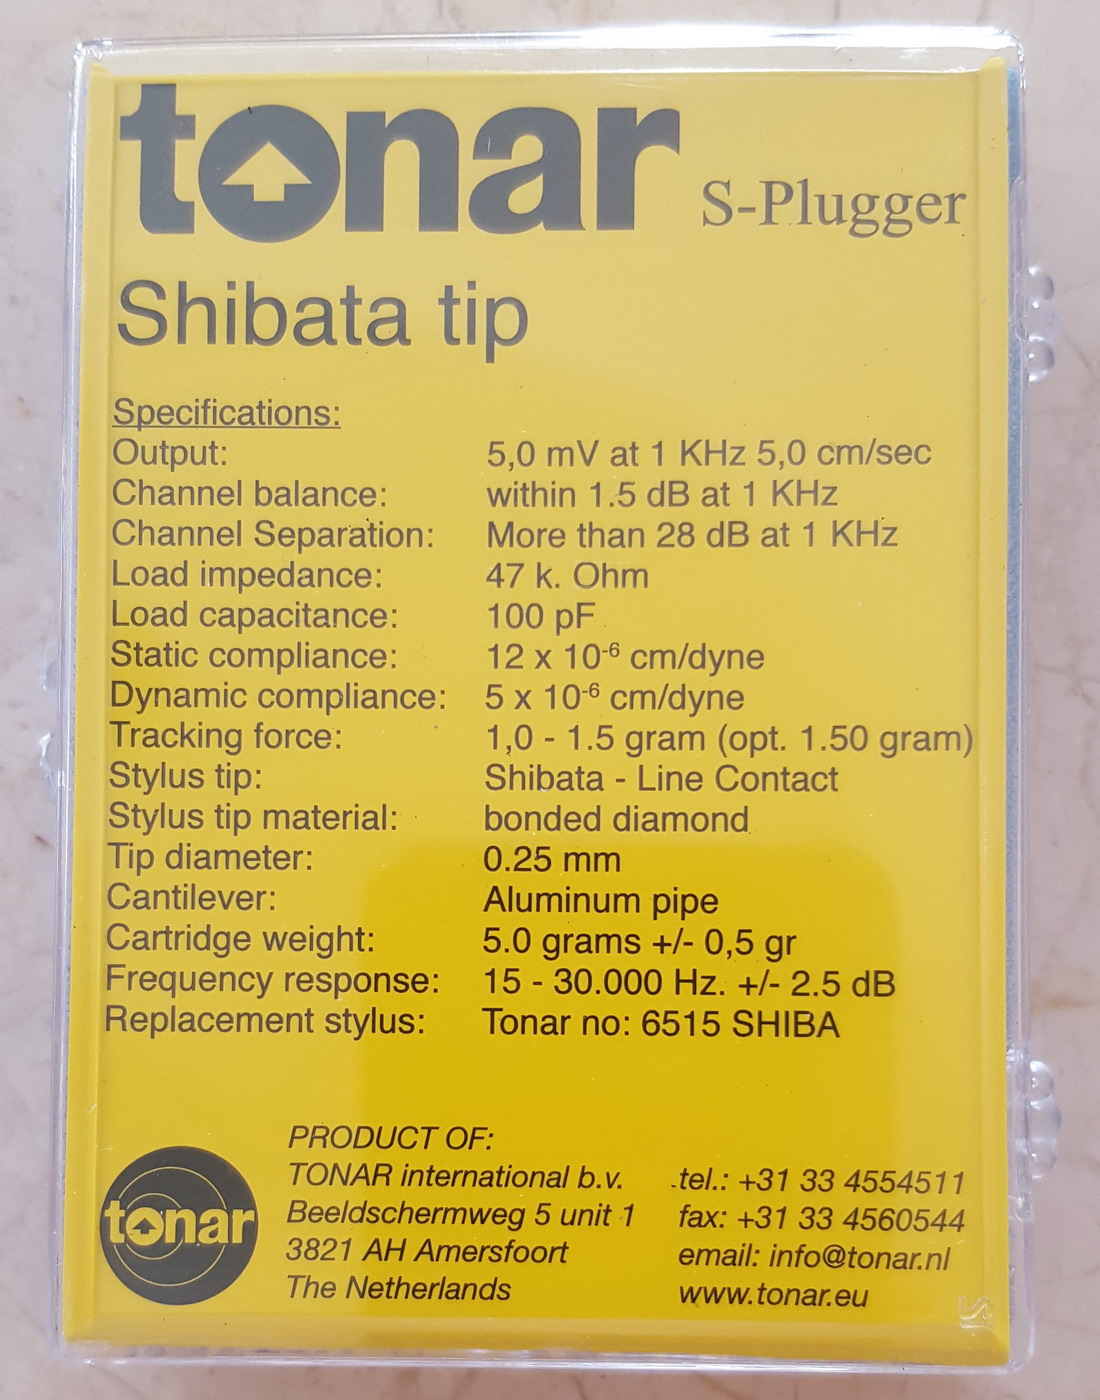   2   ,  : Tonar S-Plugger T4P (Shibata tip), art. 9590